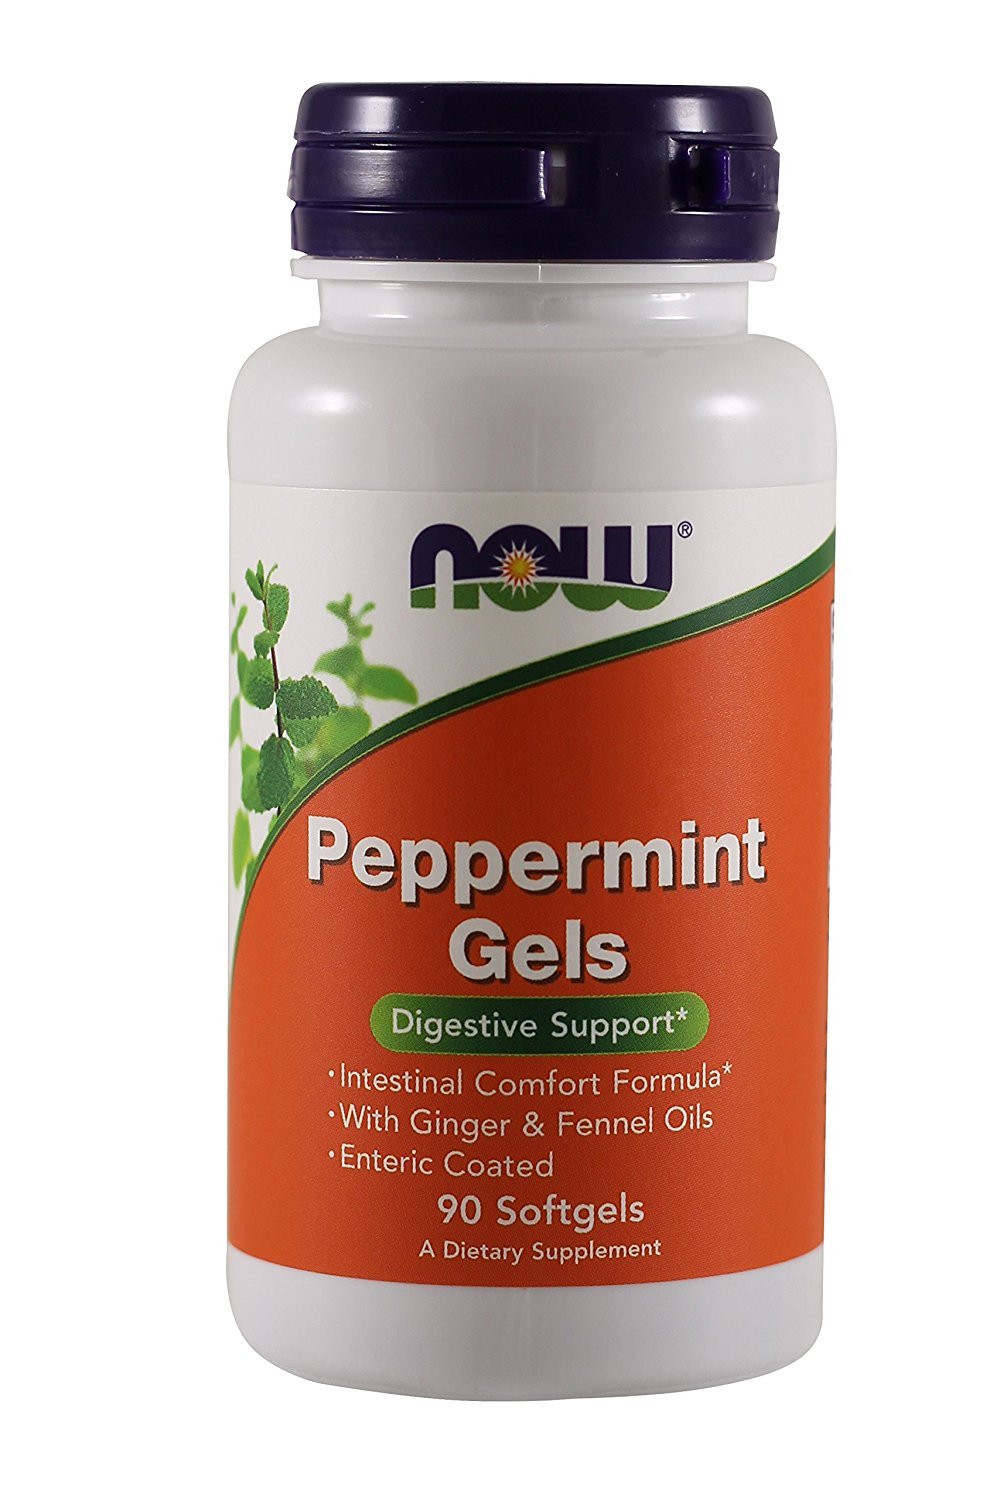 [Australia] - Now Foods Peppermint Gels - 90 softgels (Pack of 3) 